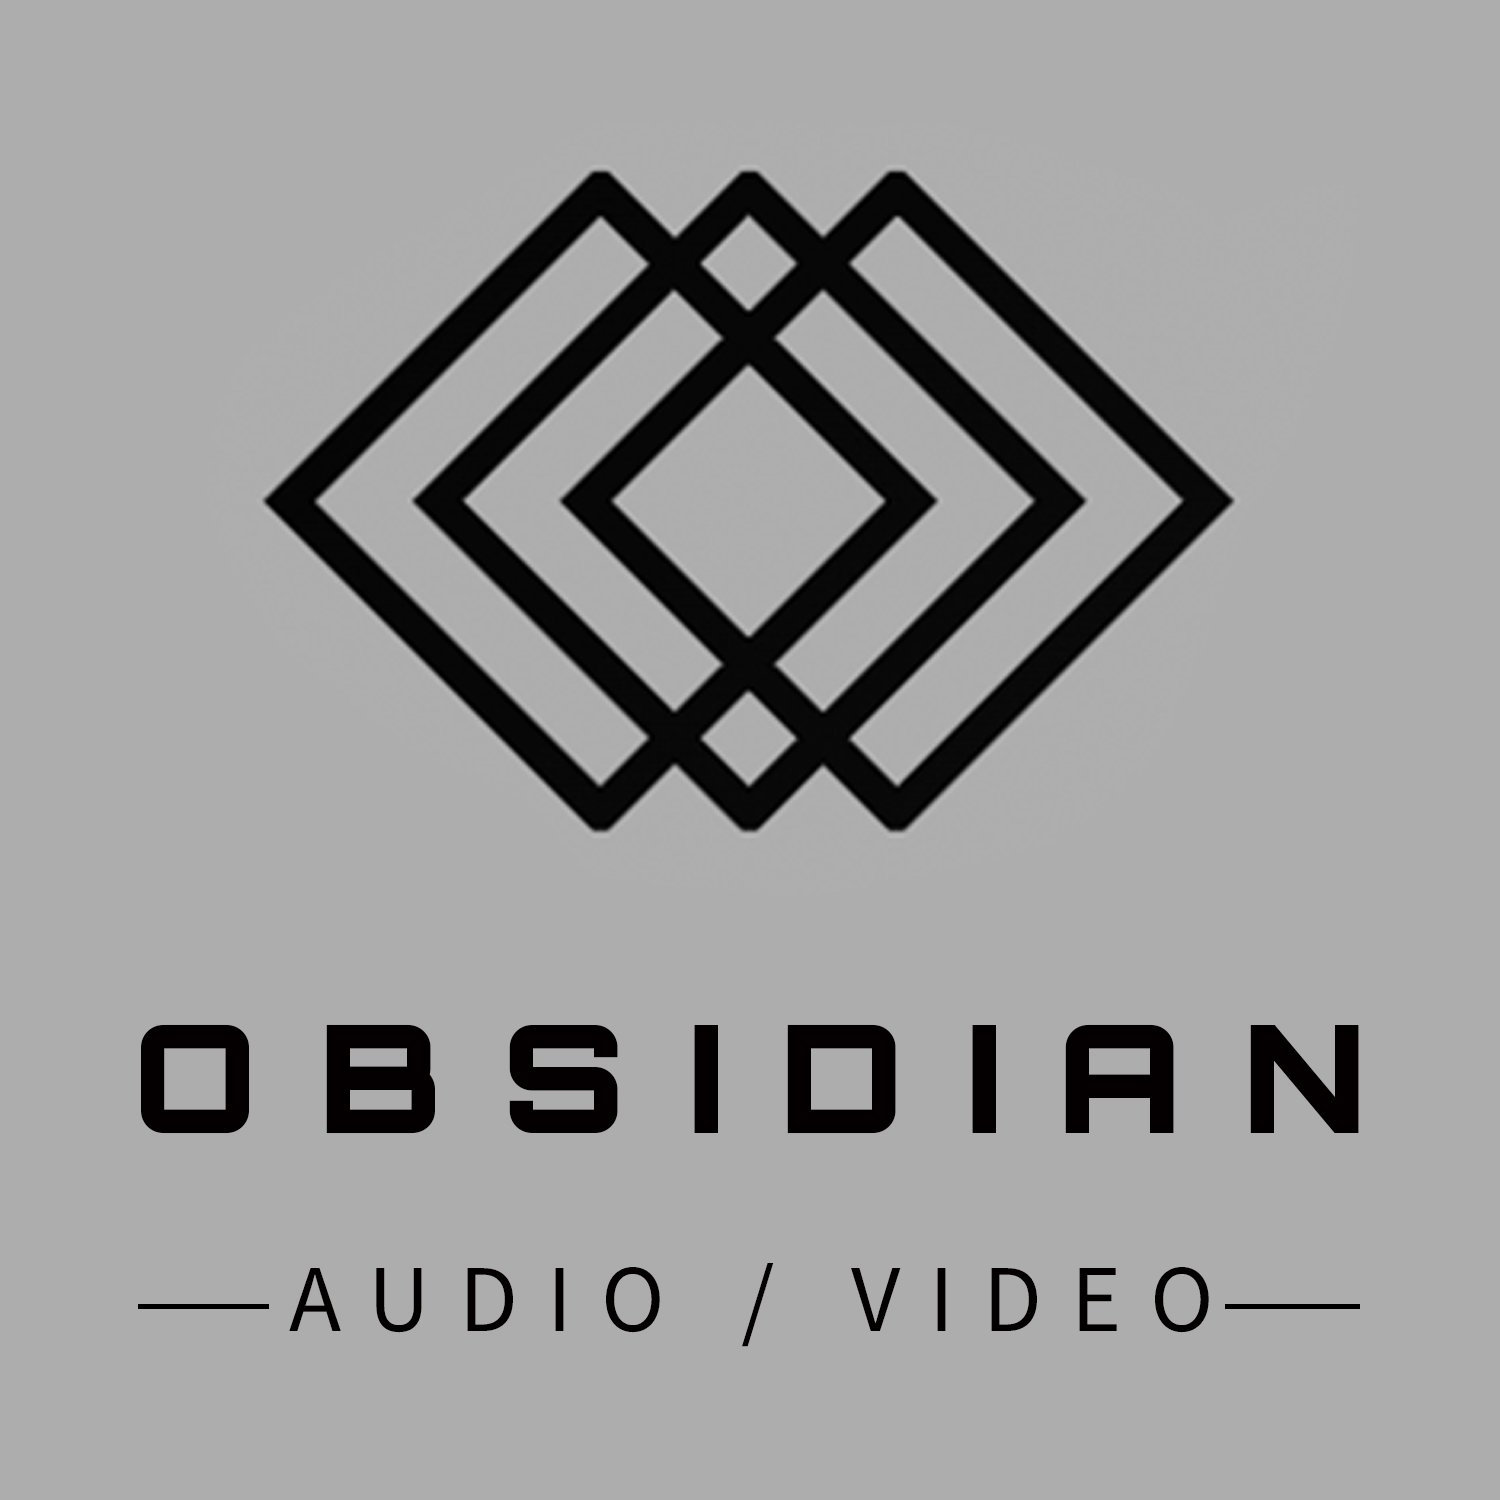 Obsidian Audio Video